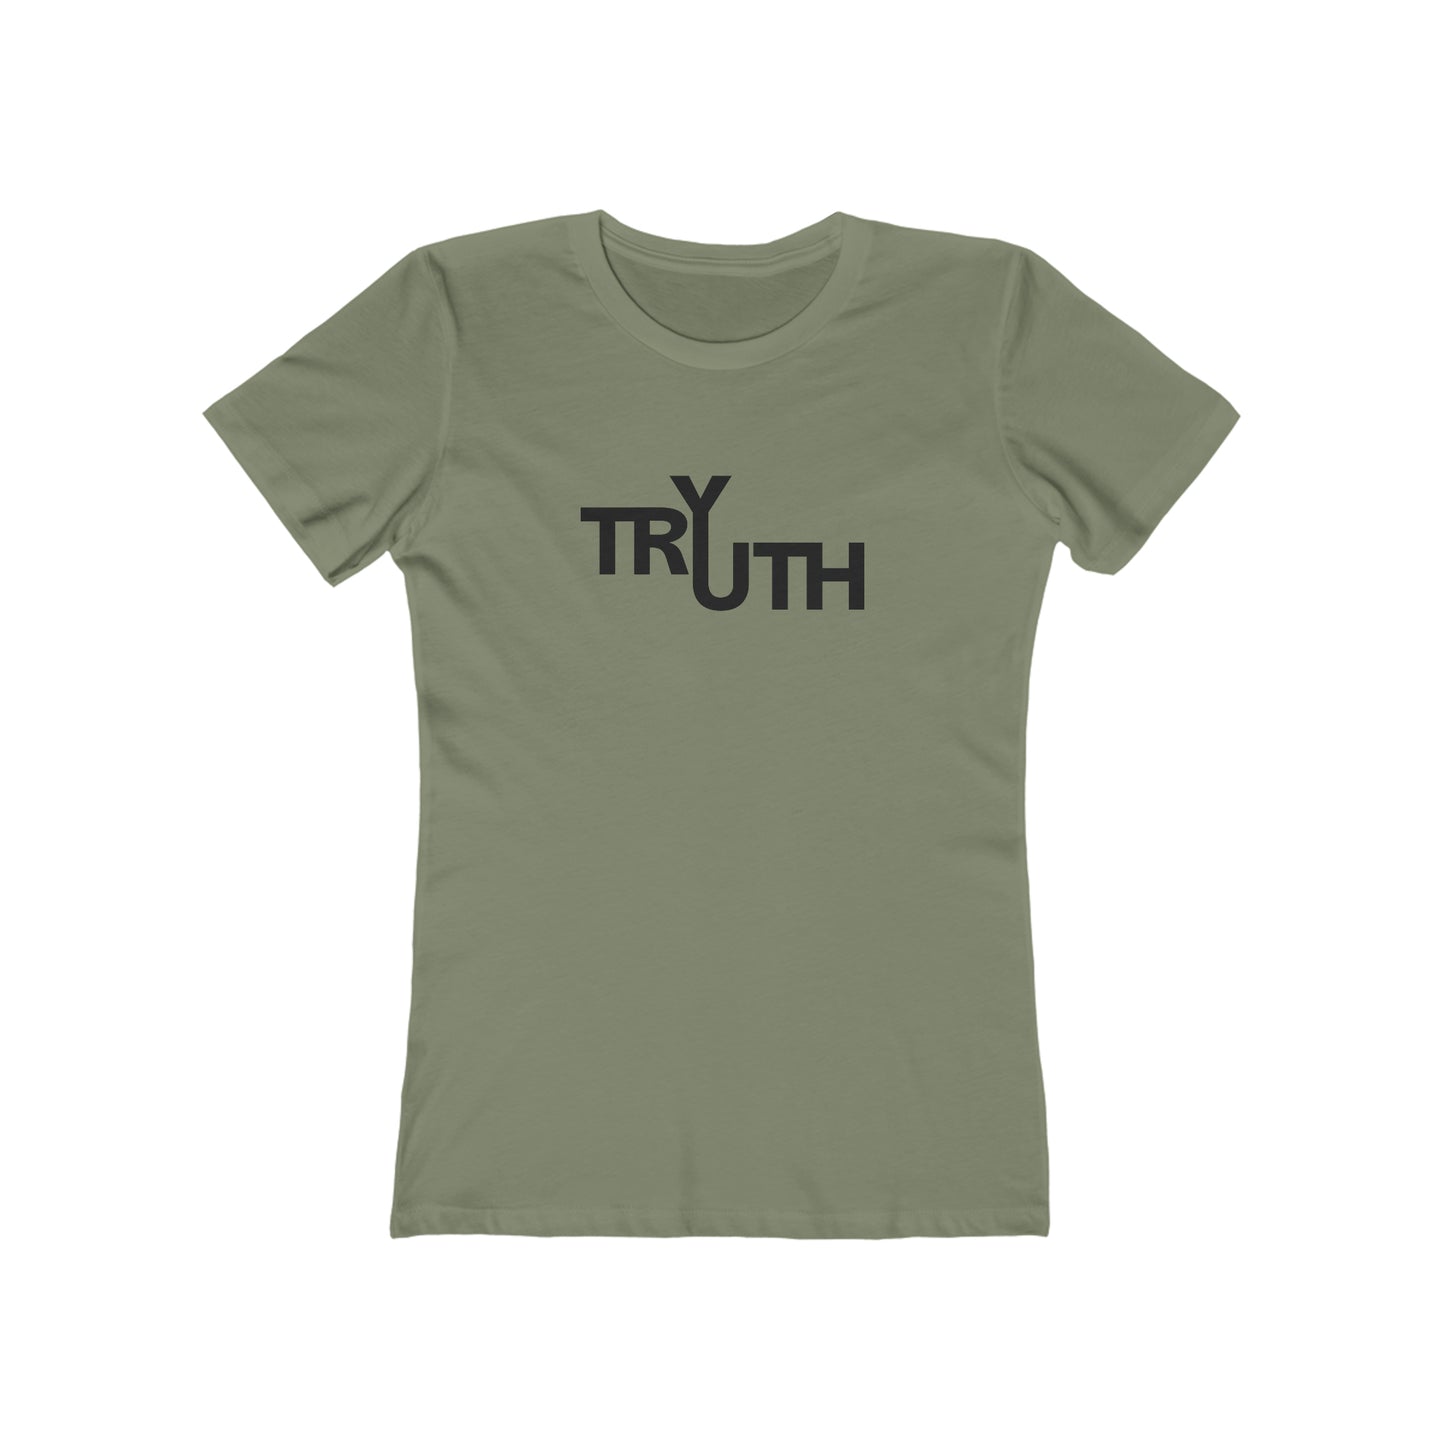 Try Truth - Women's T-Shirt